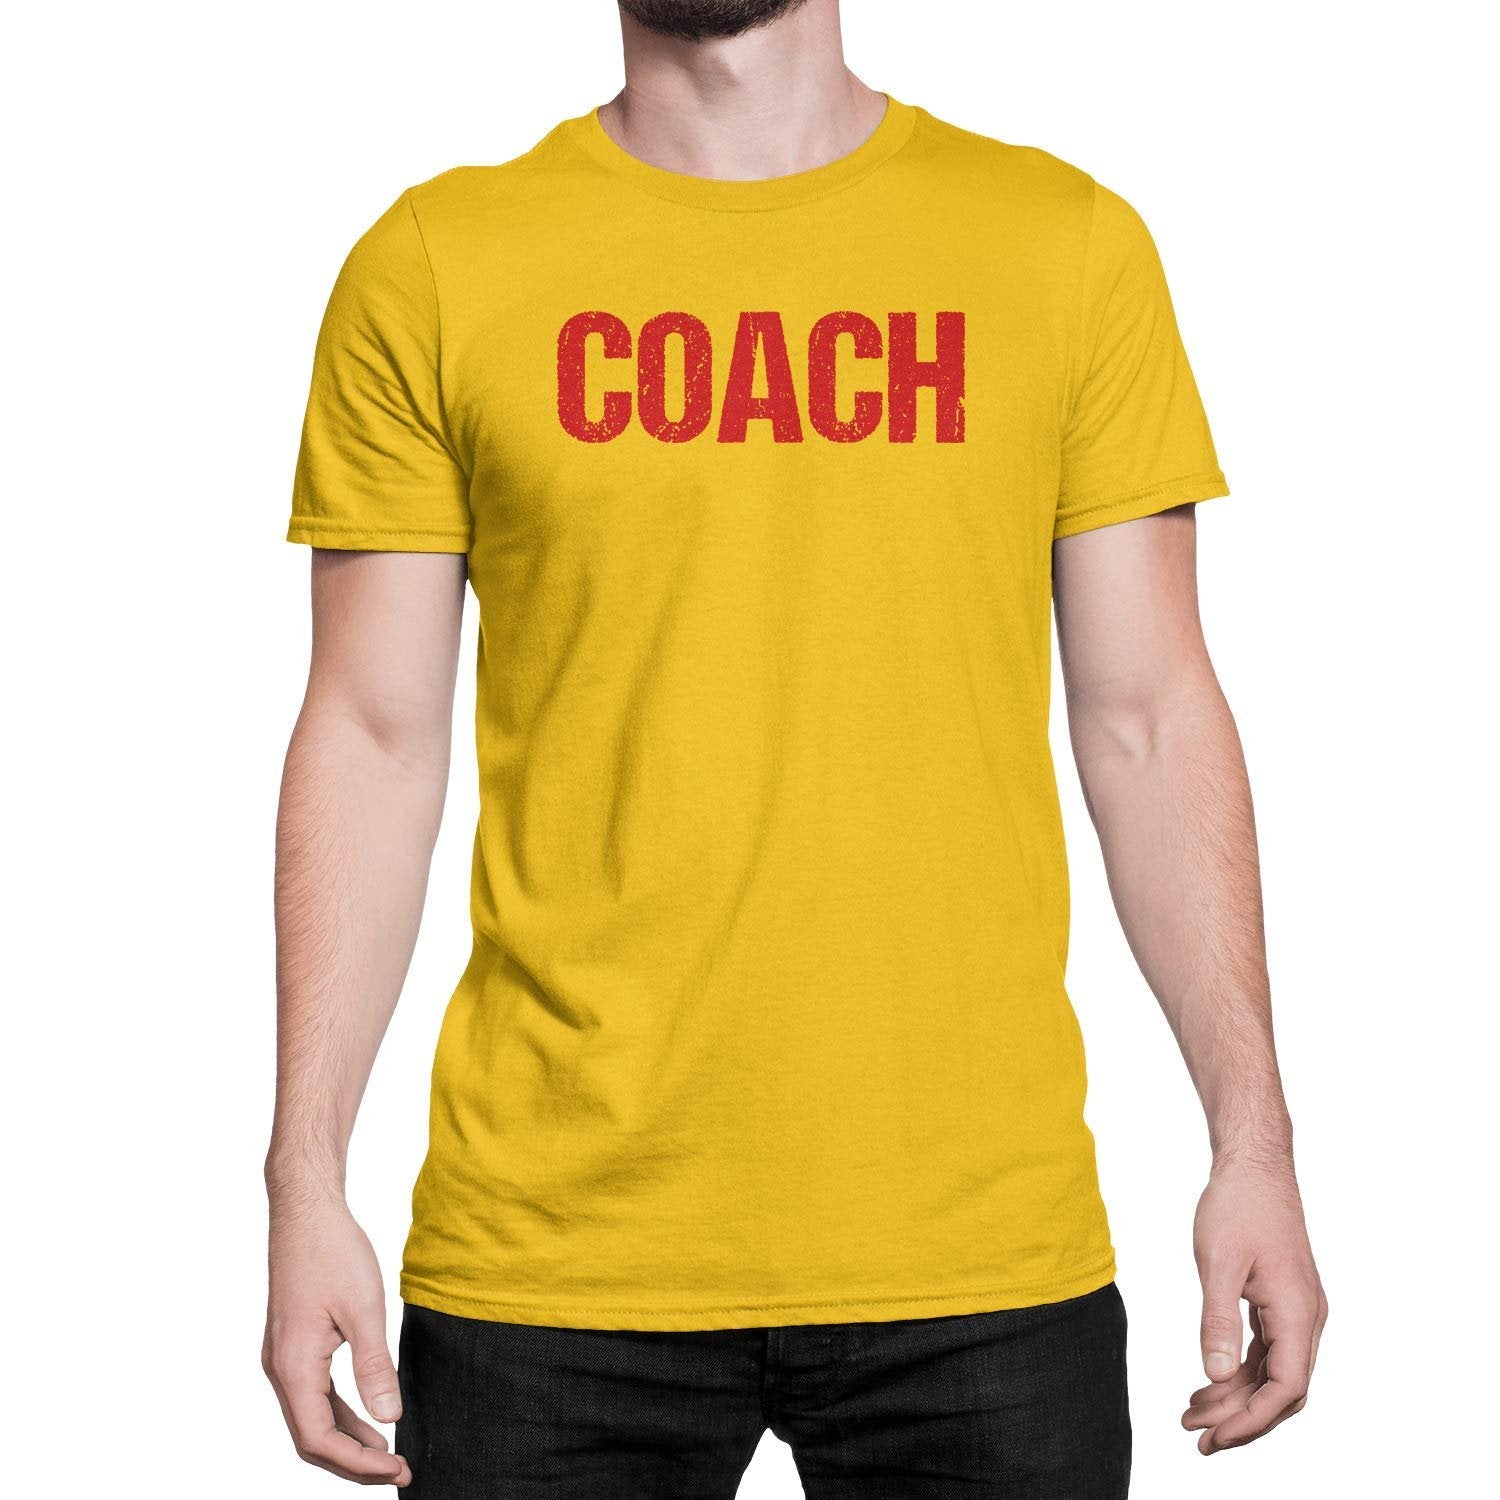 Coach T-Shirt Sports Coaching Tee Shirt (Gold & Red, Distressed)